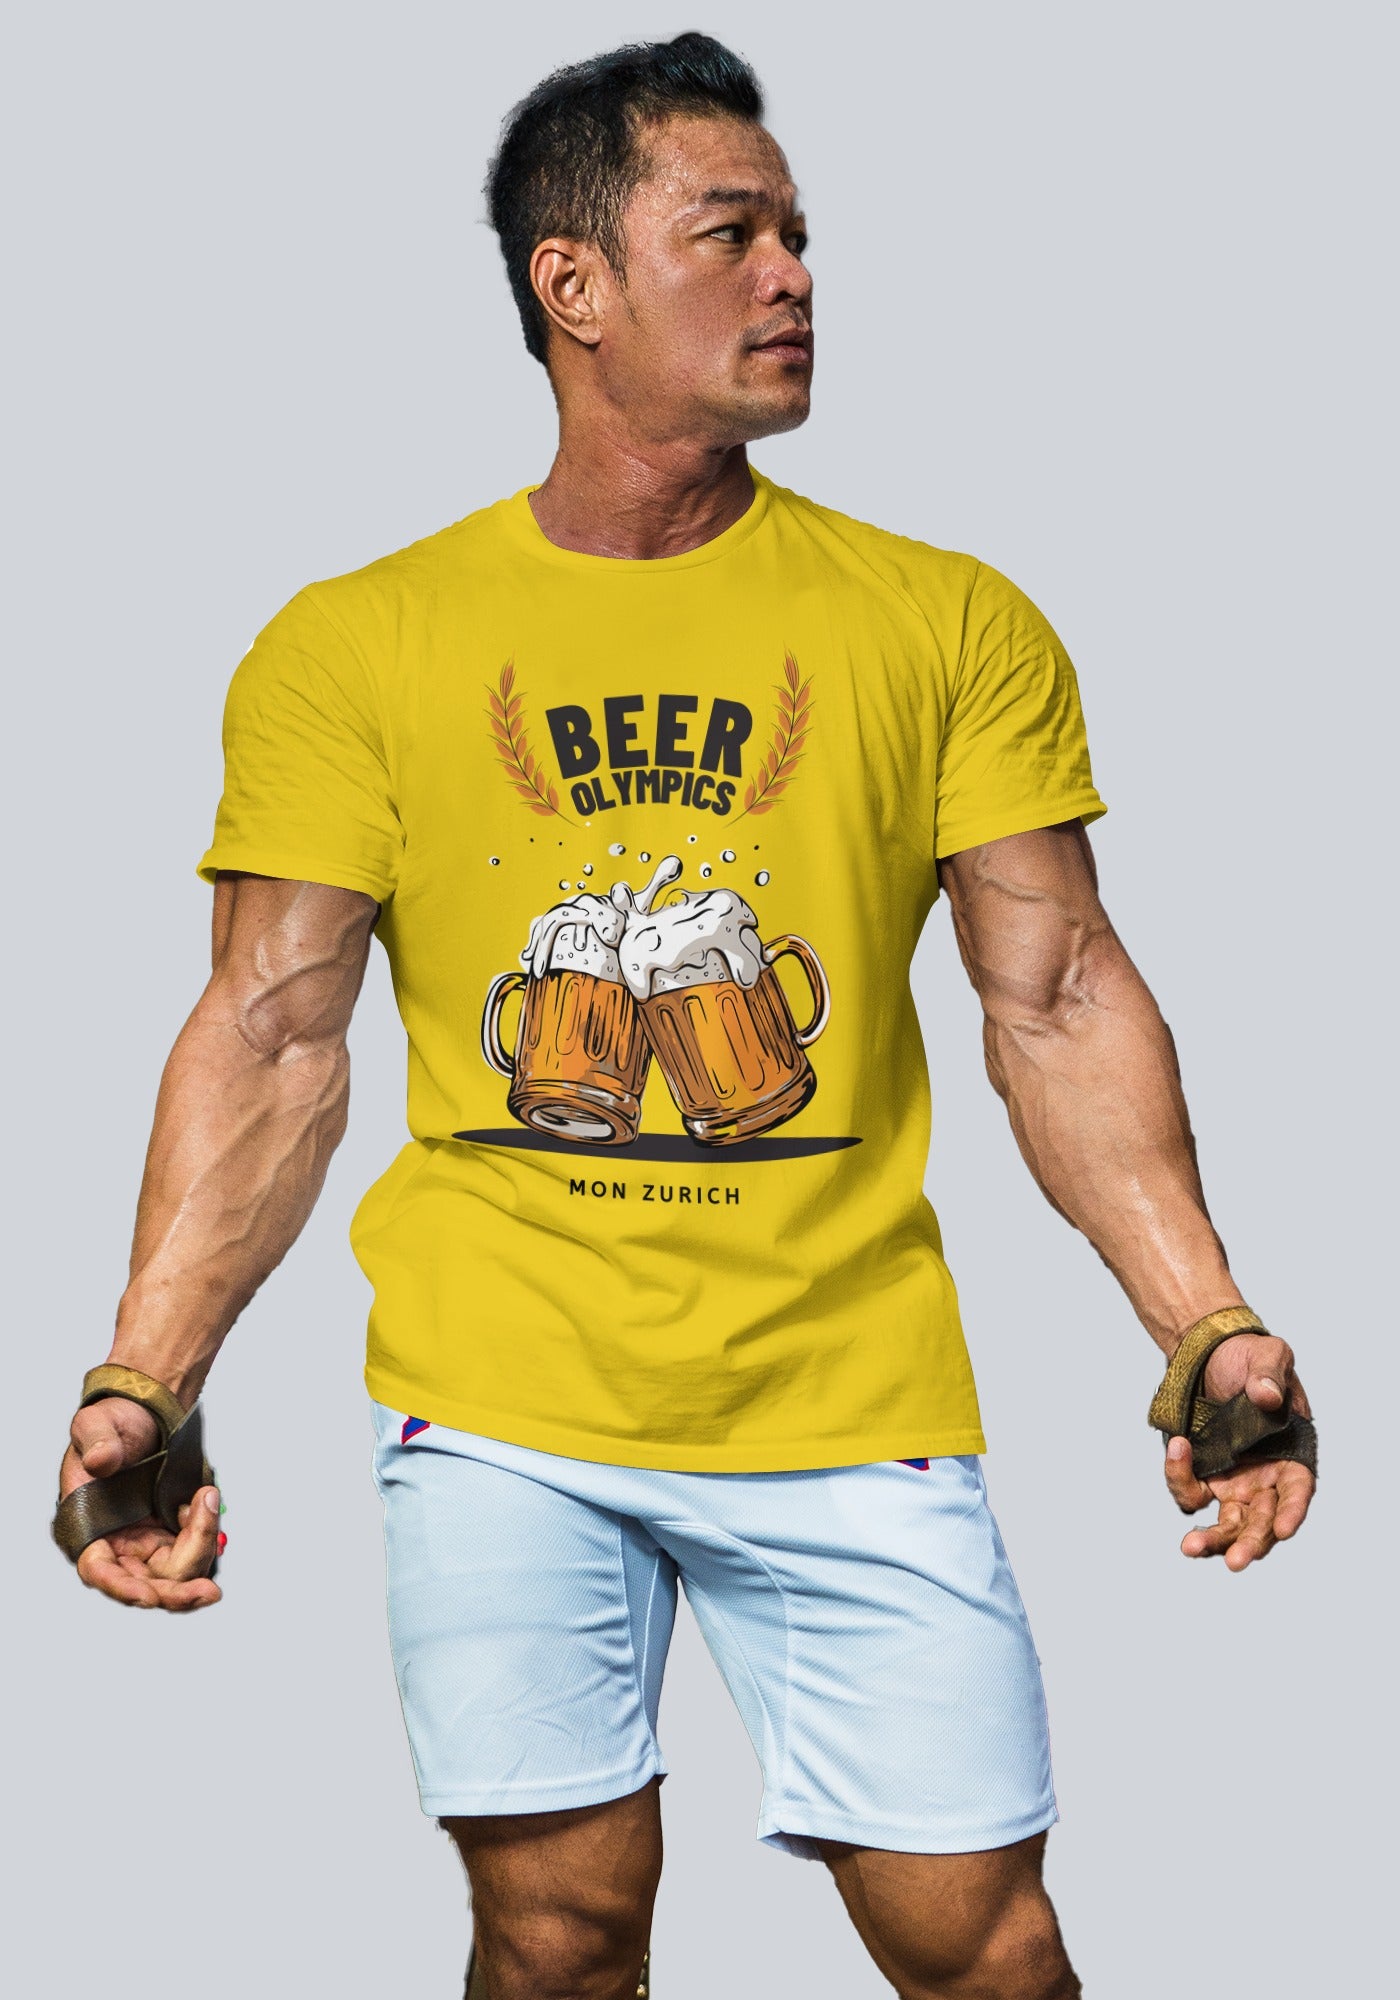 Beer Olymipics T-Shirt In Light - Mon Zurich Originals